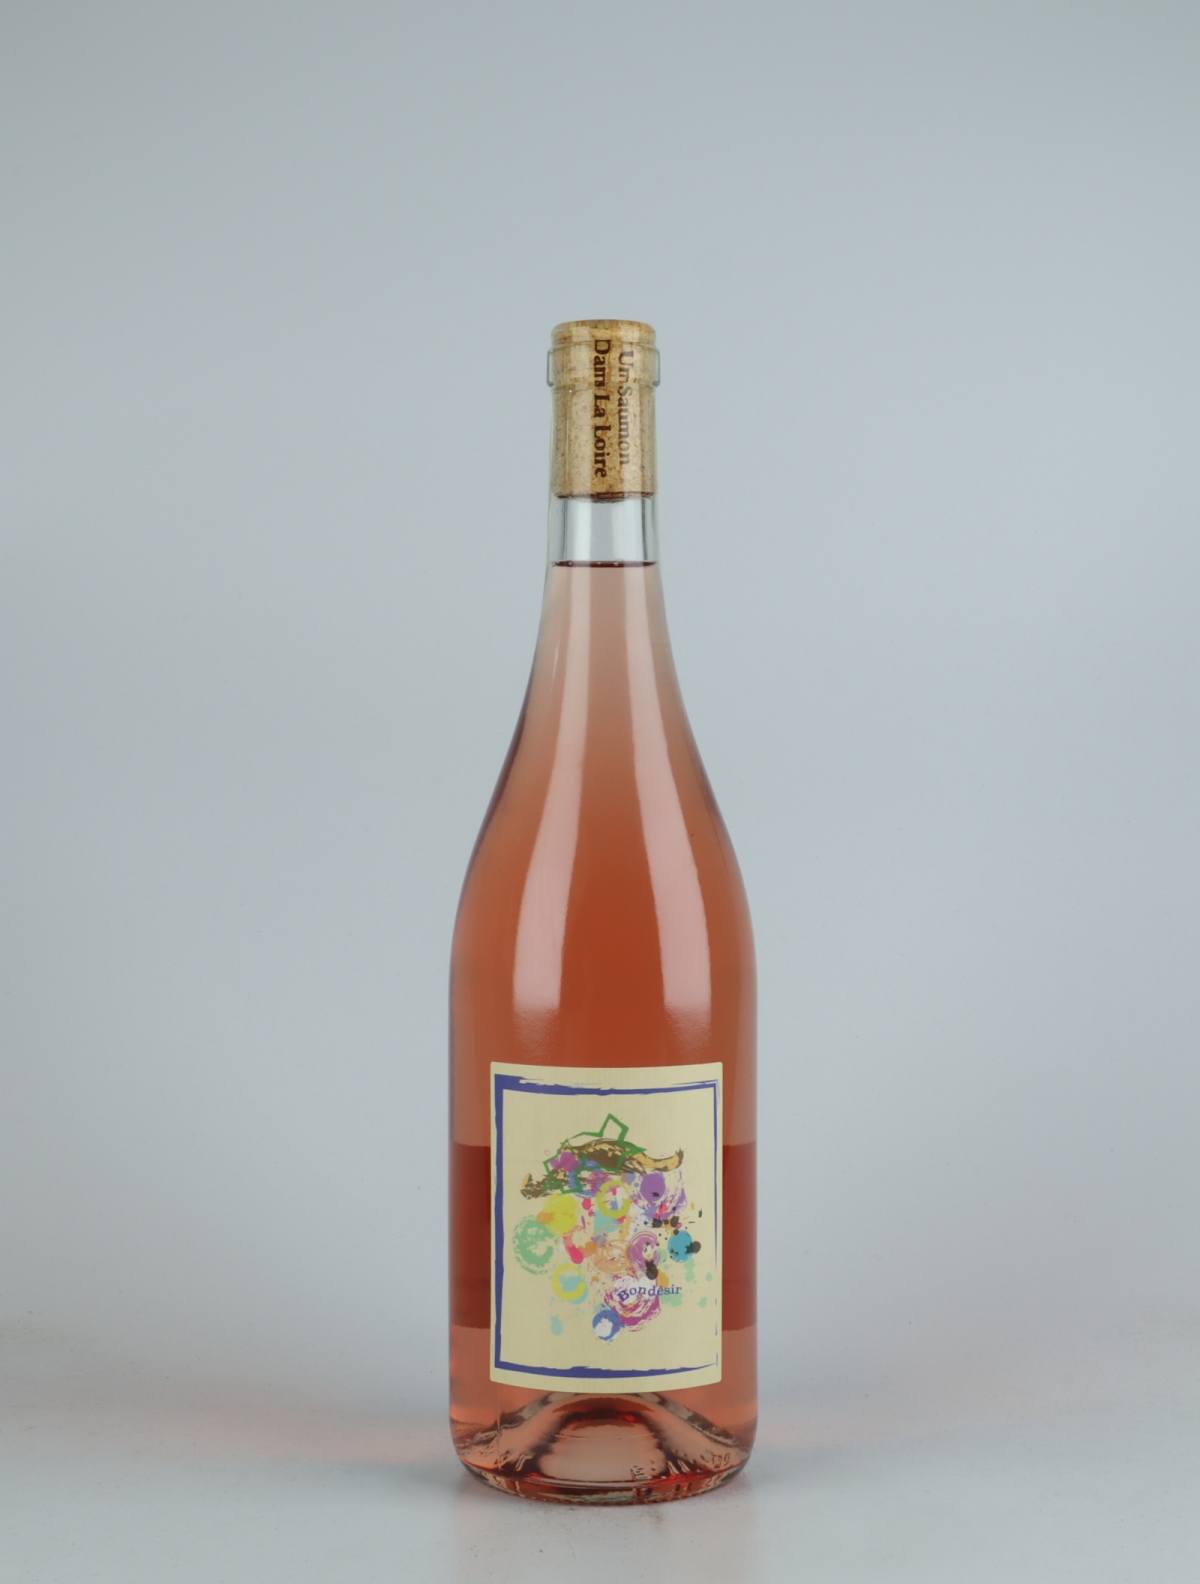 En flaske 2021 Rosé - Vin de Frantz Rosé fra Frantz Saumon, Loire i Frankrig